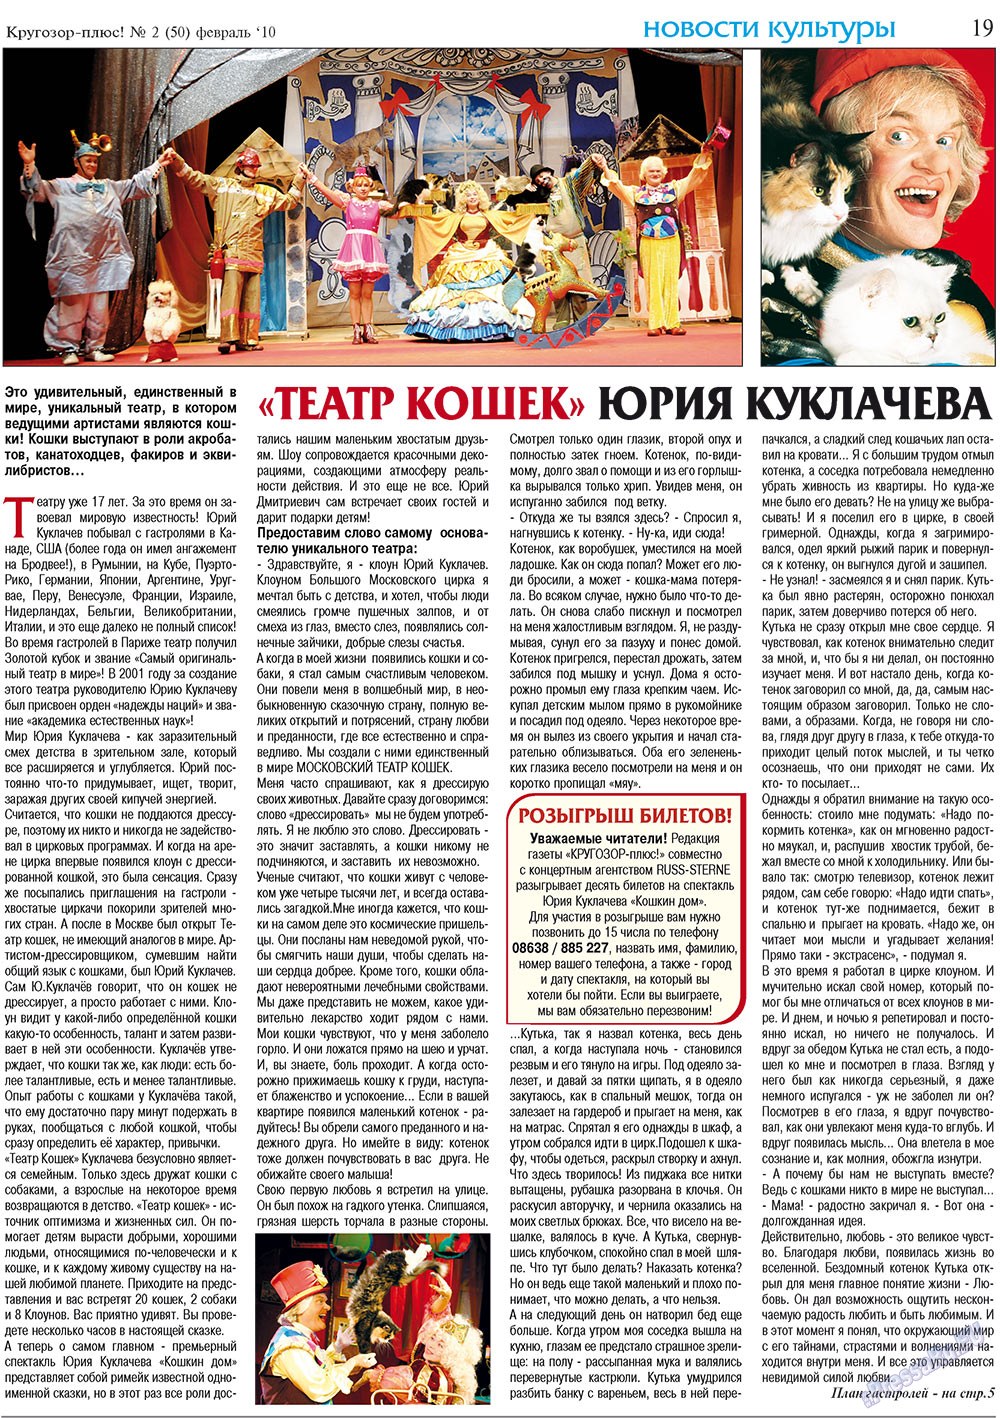 Кругозор плюс! (газета). 2010 год, номер 2, стр. 19